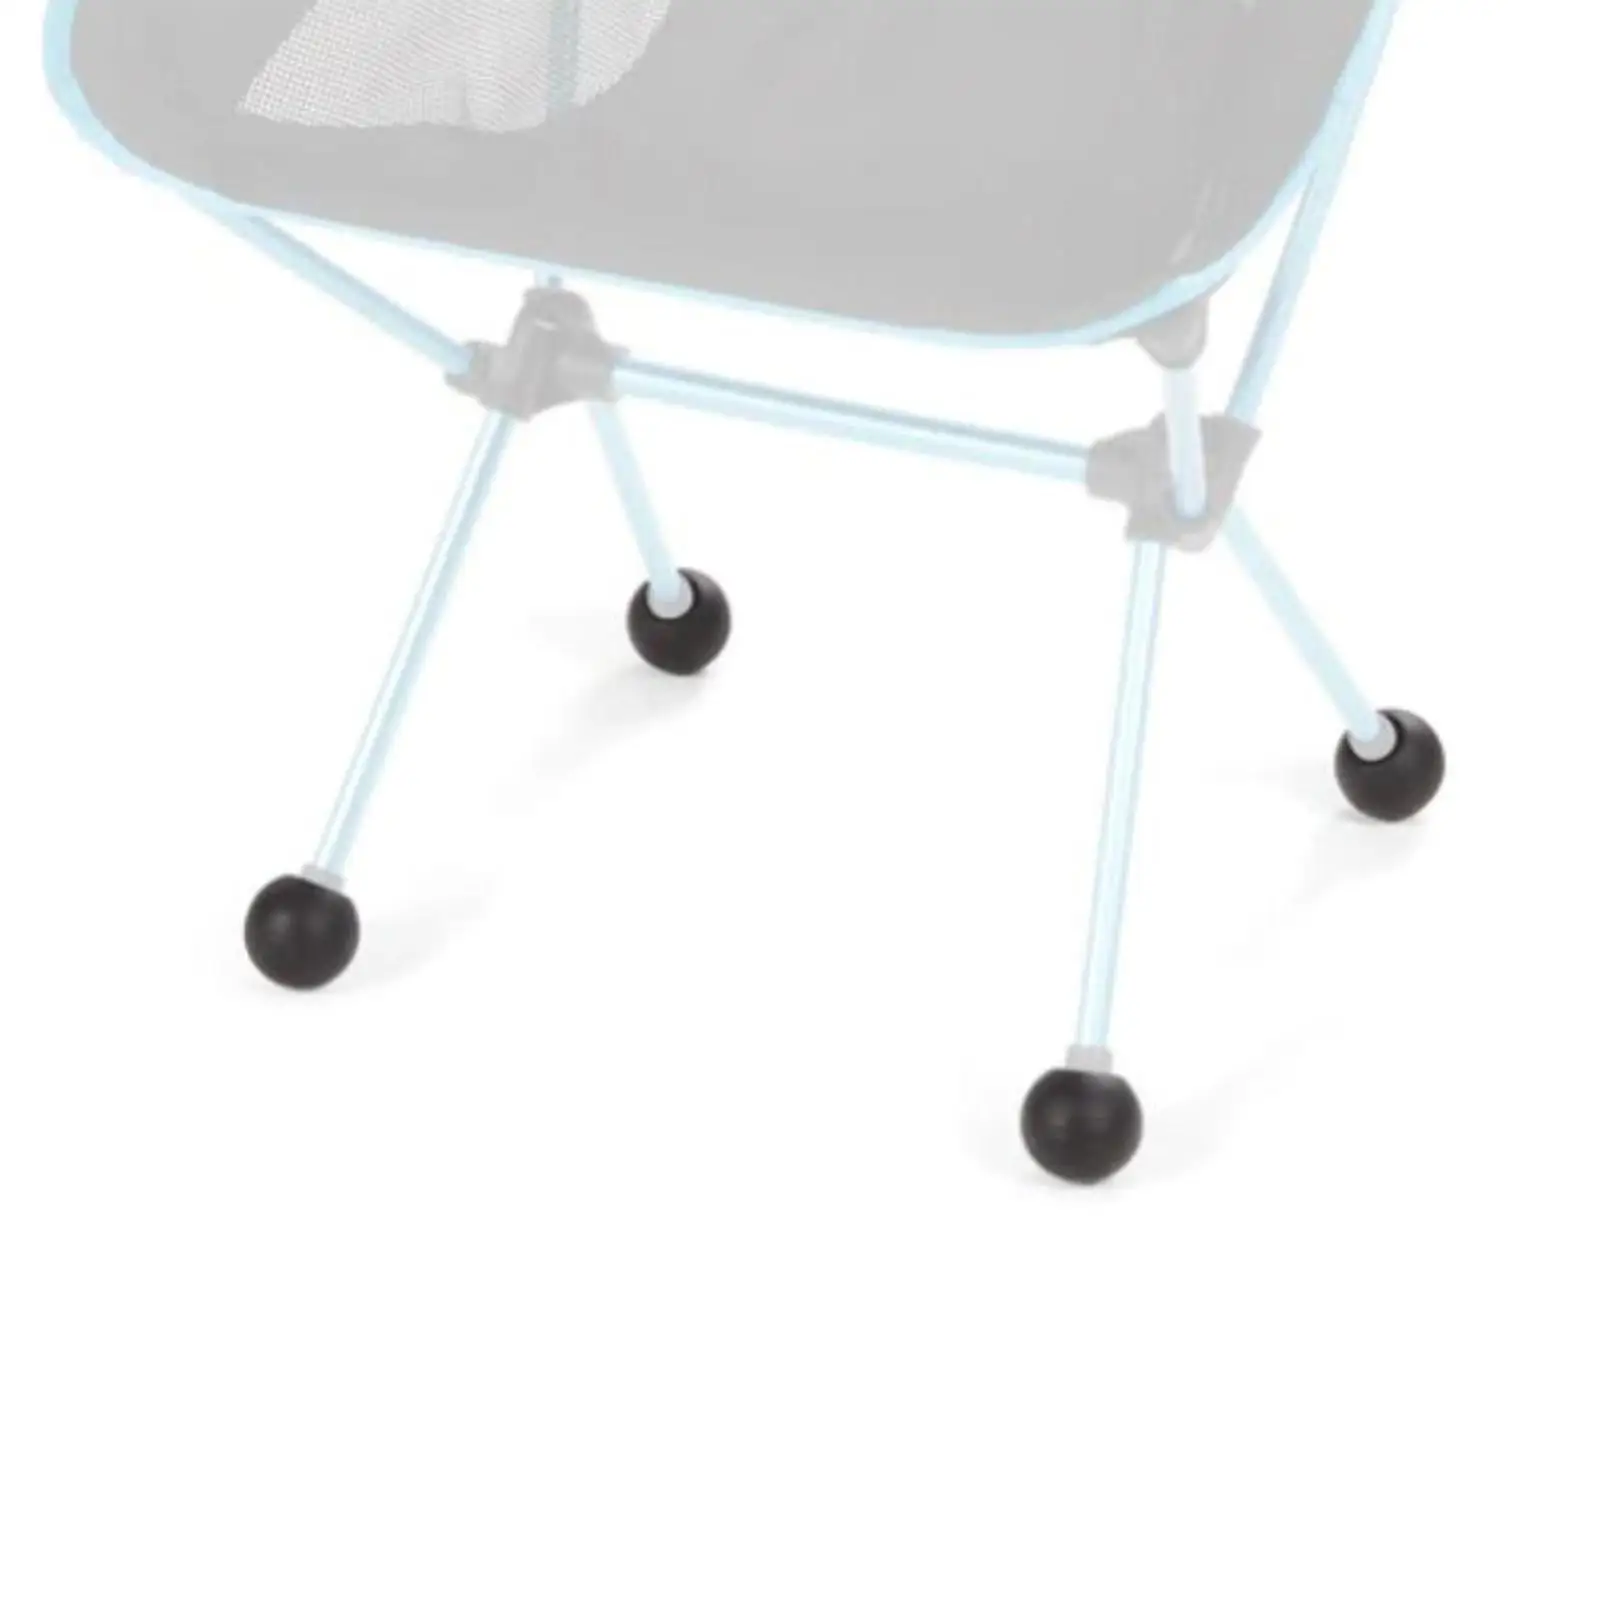 Chair Leg Caps Durable Reusable Table Leg Protect for Moon Chairs Home Wood Floors